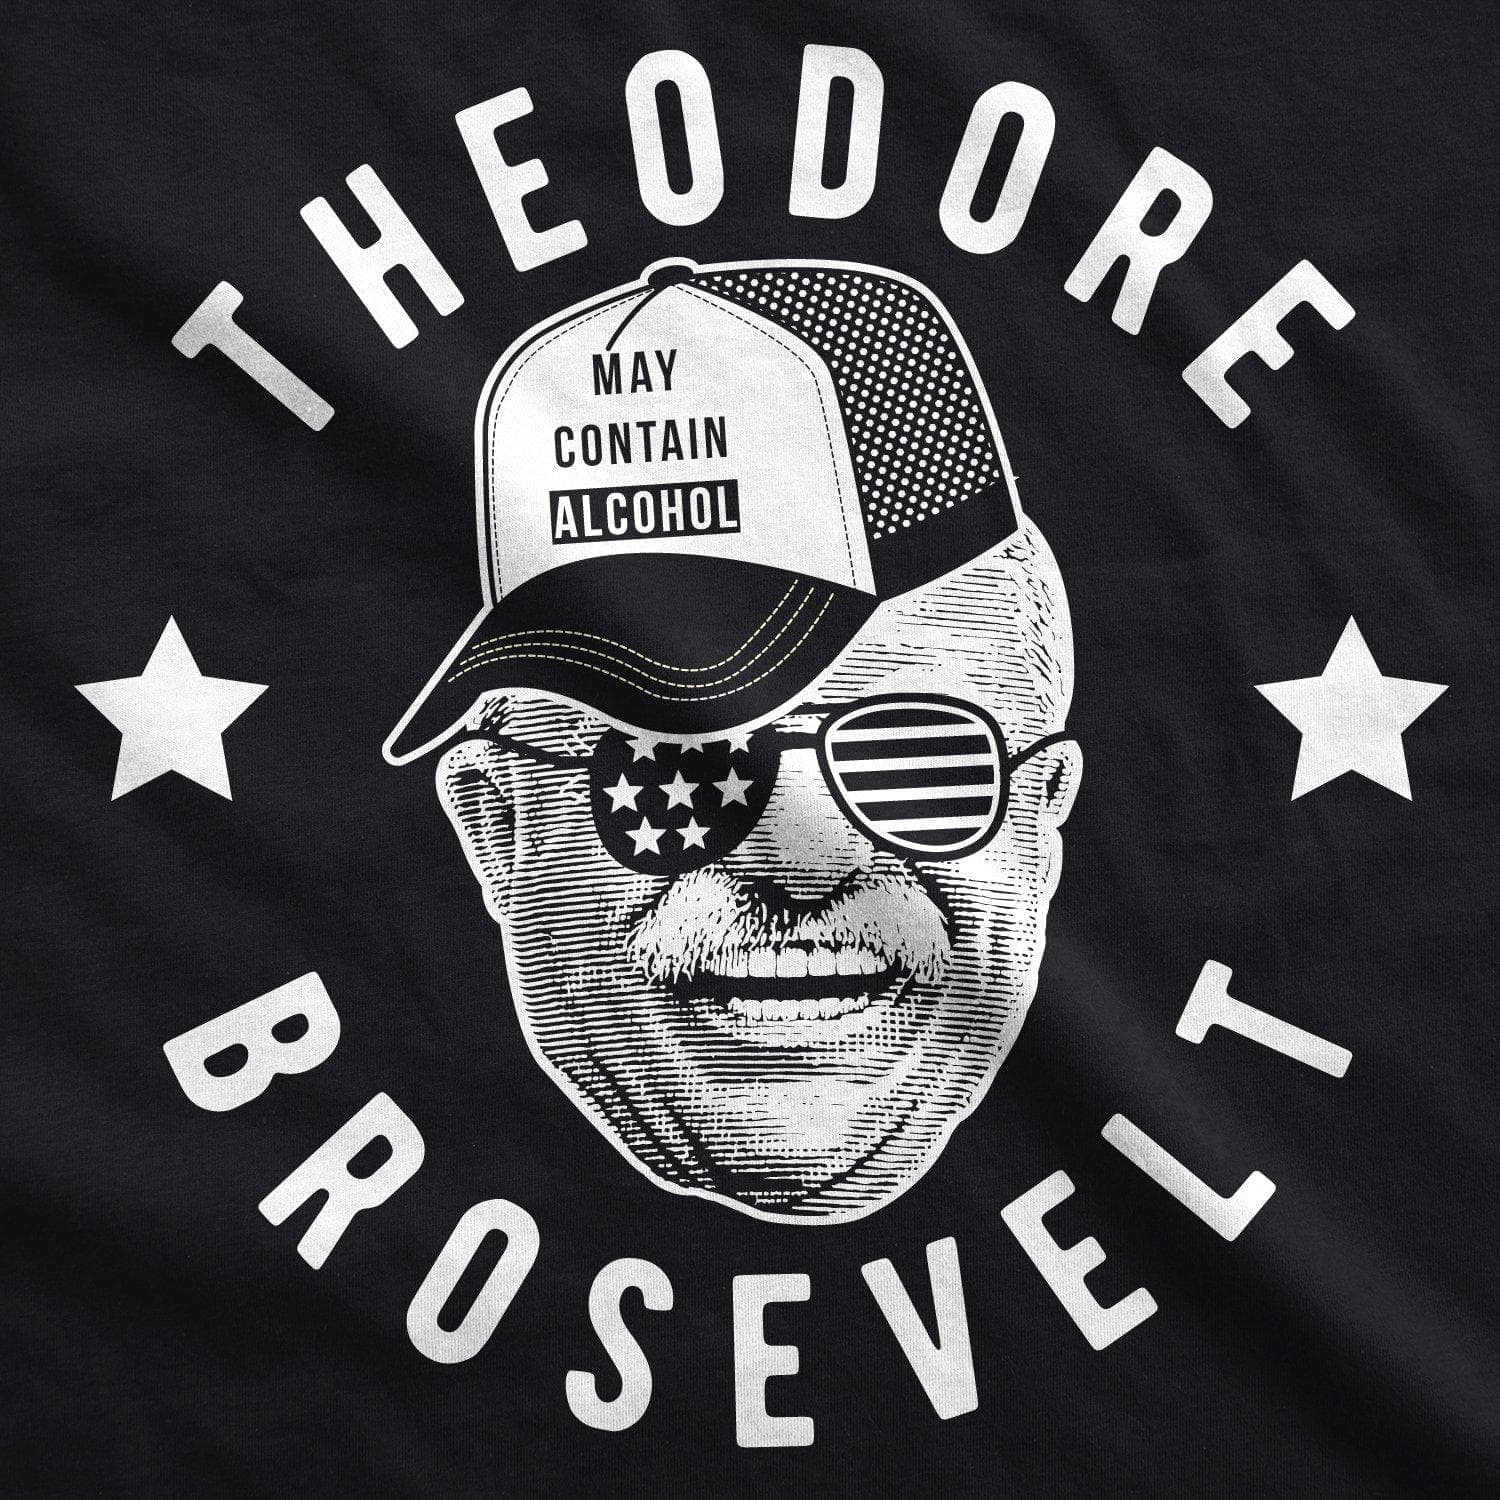 Theodore Brosevelt Men's Tank Top - Crazy Dog T-Shirts